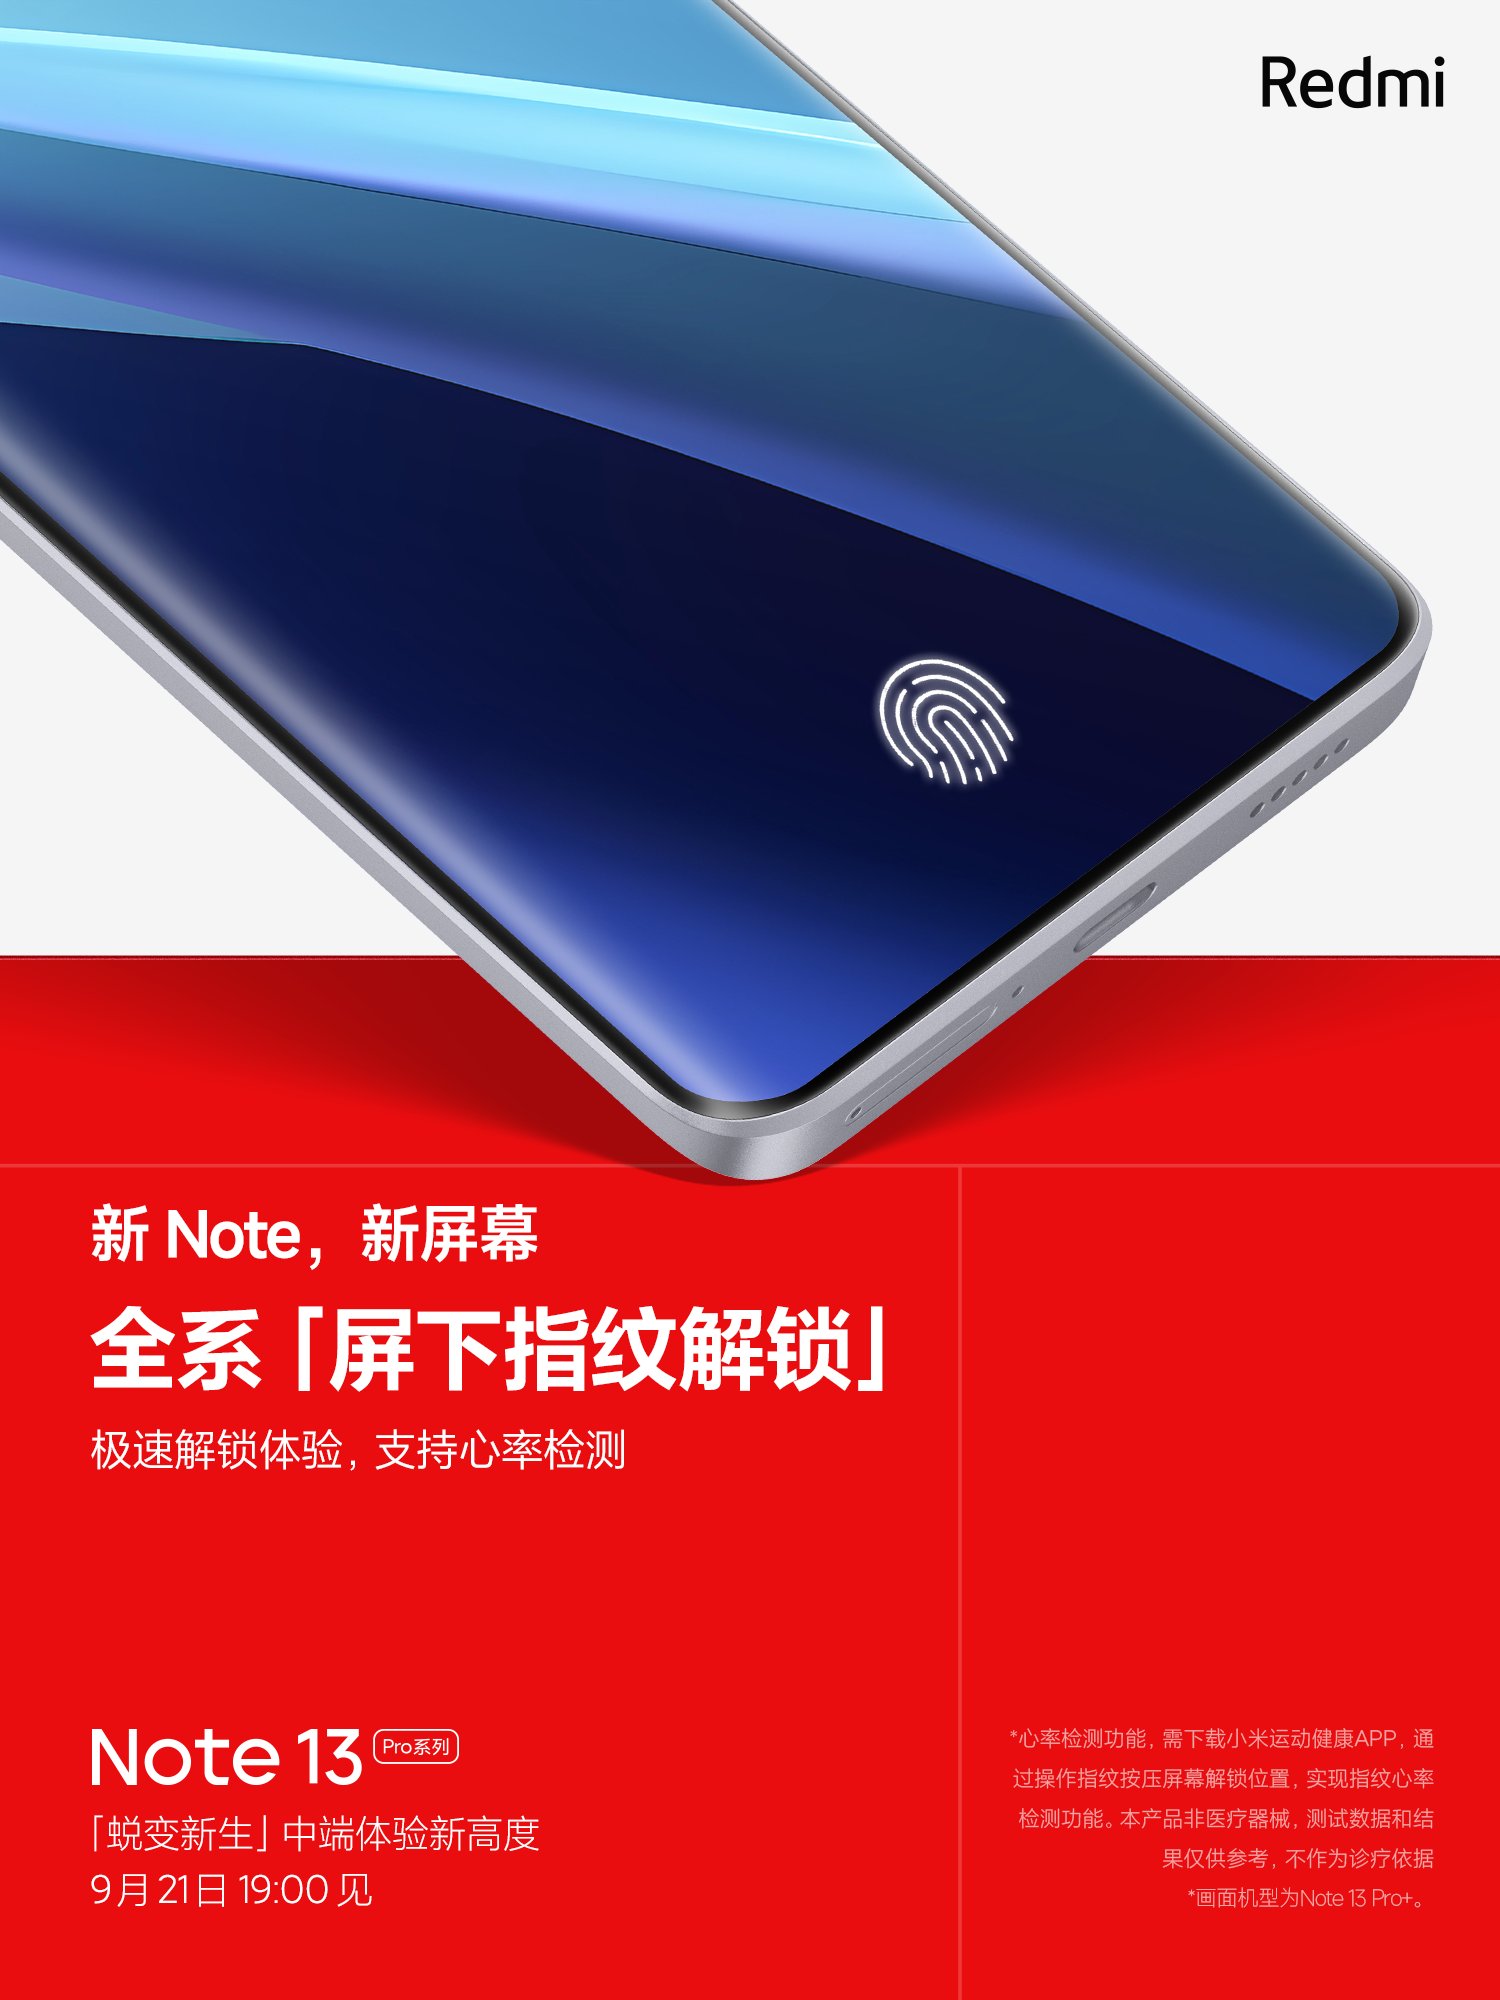 Redmi Note 13 Pro+ In-display fingerprint scanner 